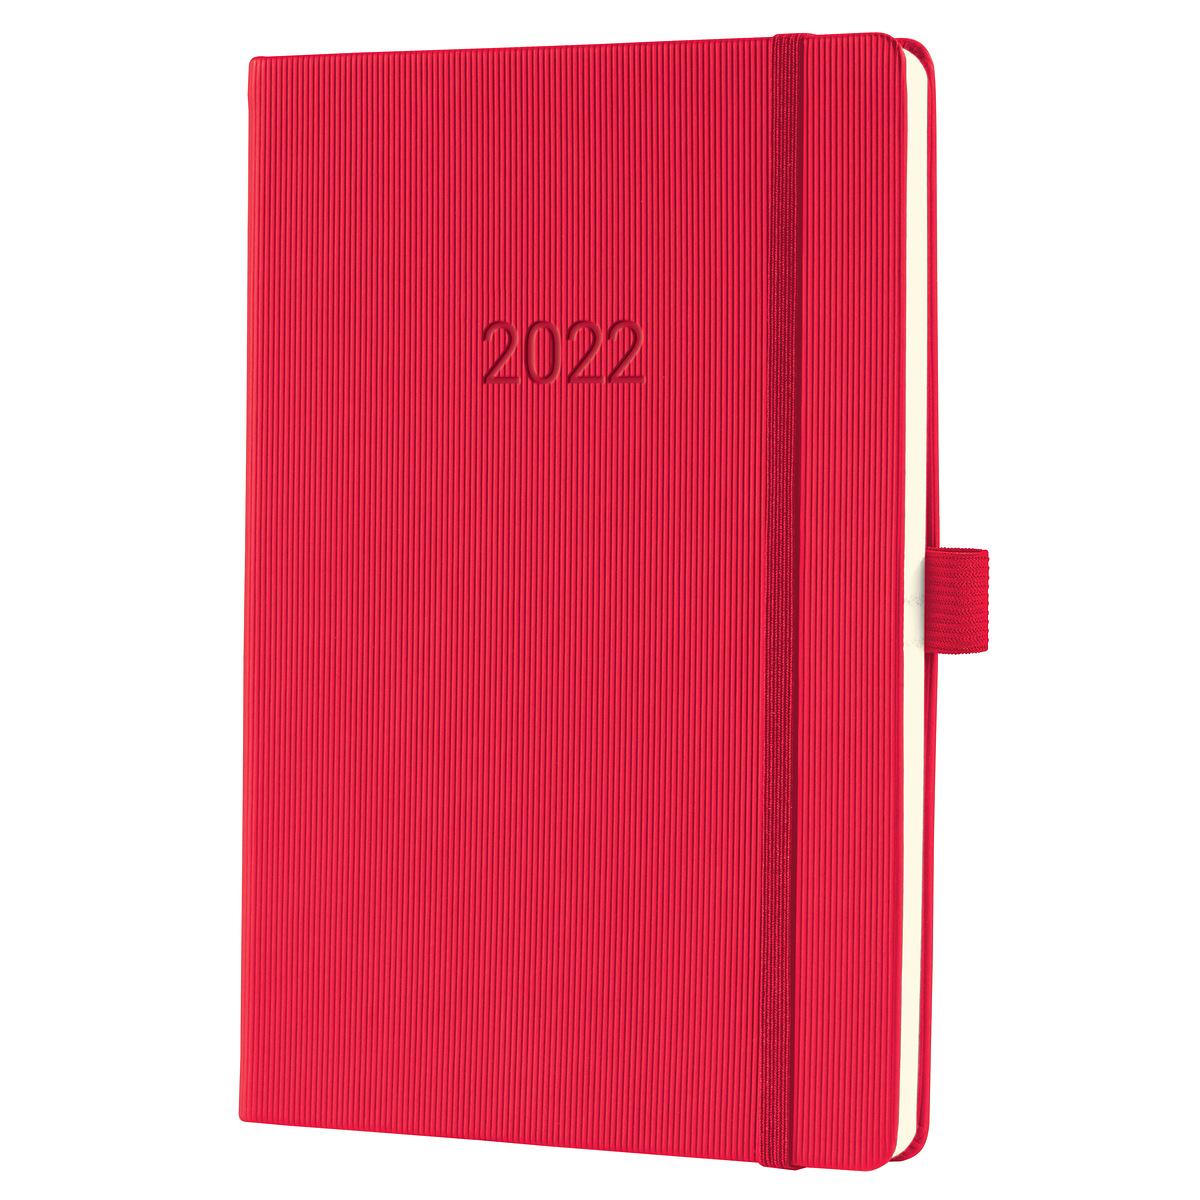 C2264-Kalender-2022-CONCEPTUM-hardcover